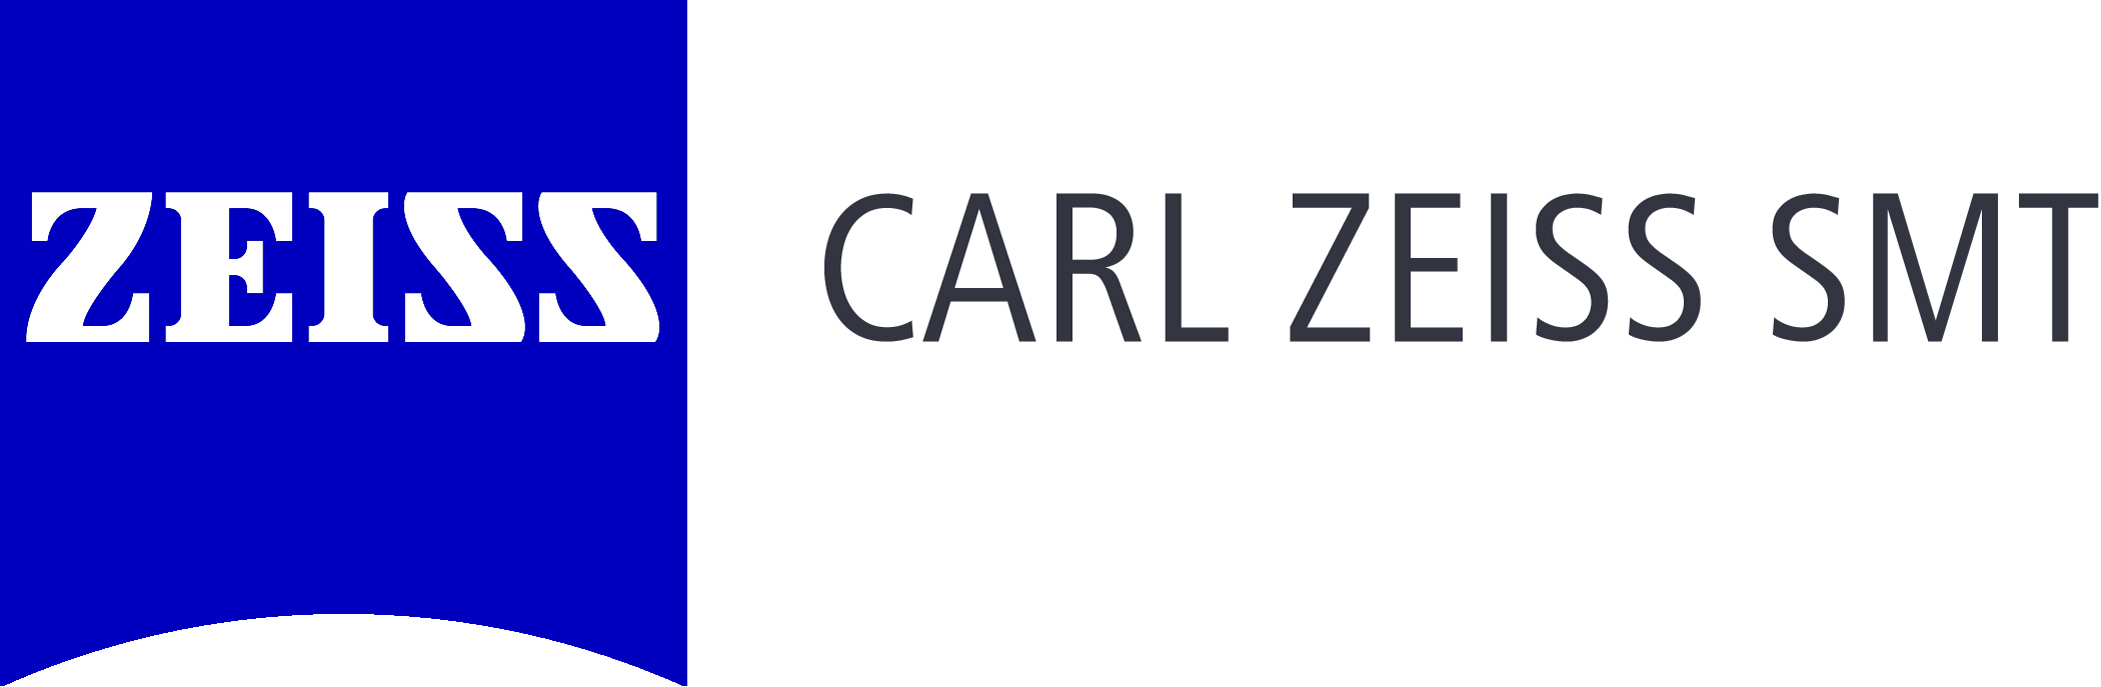 Full name, Fußballclub Carl 